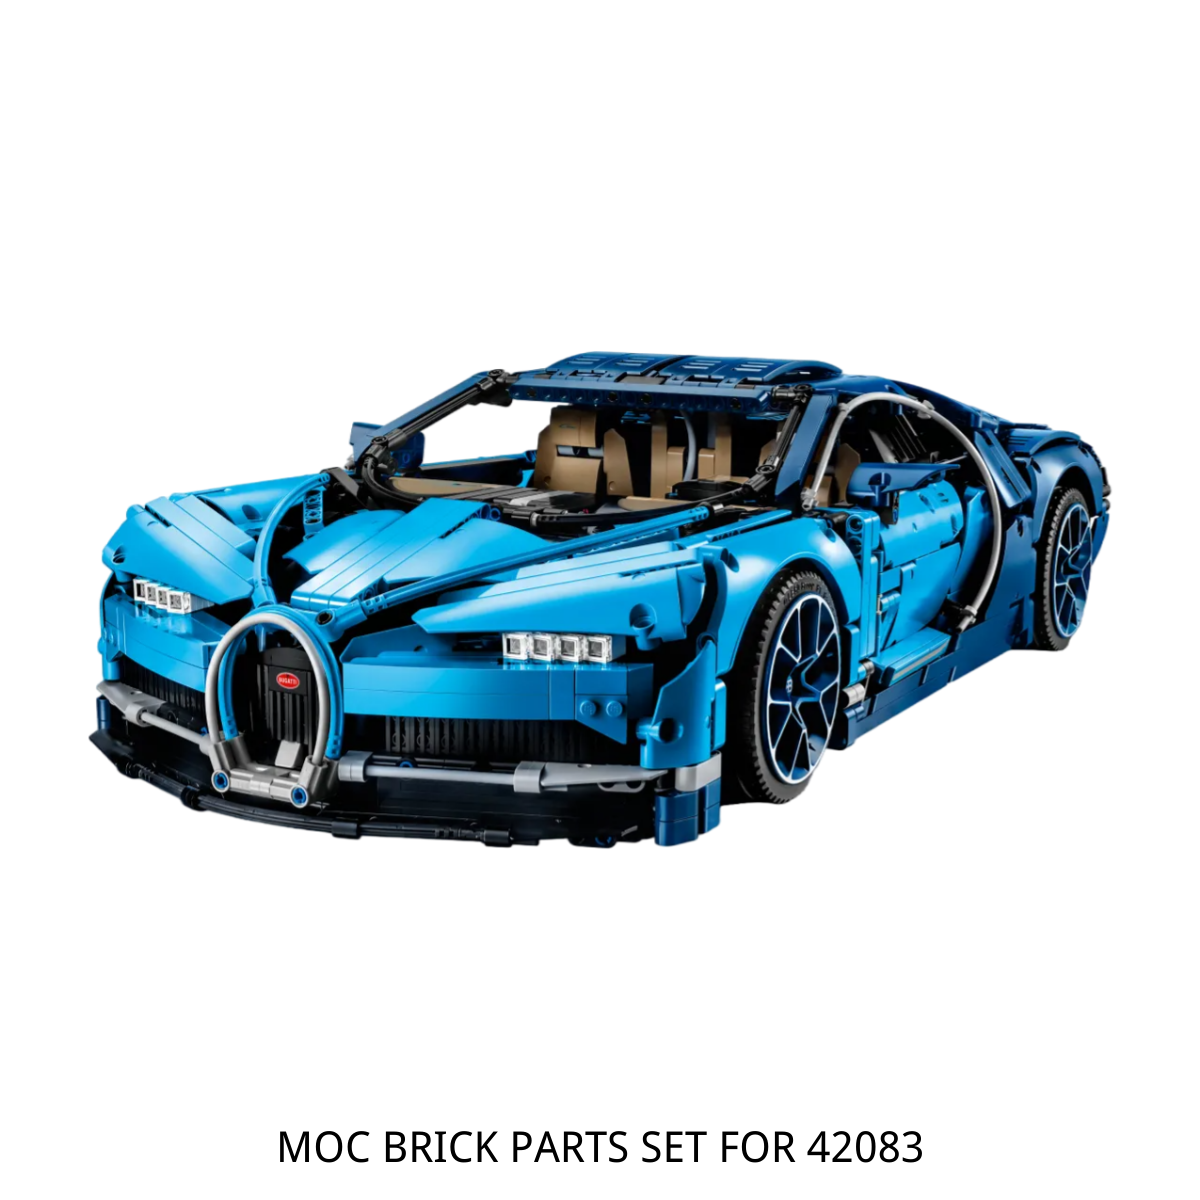 MOC bricks set for 42083 Bugatti Chiron